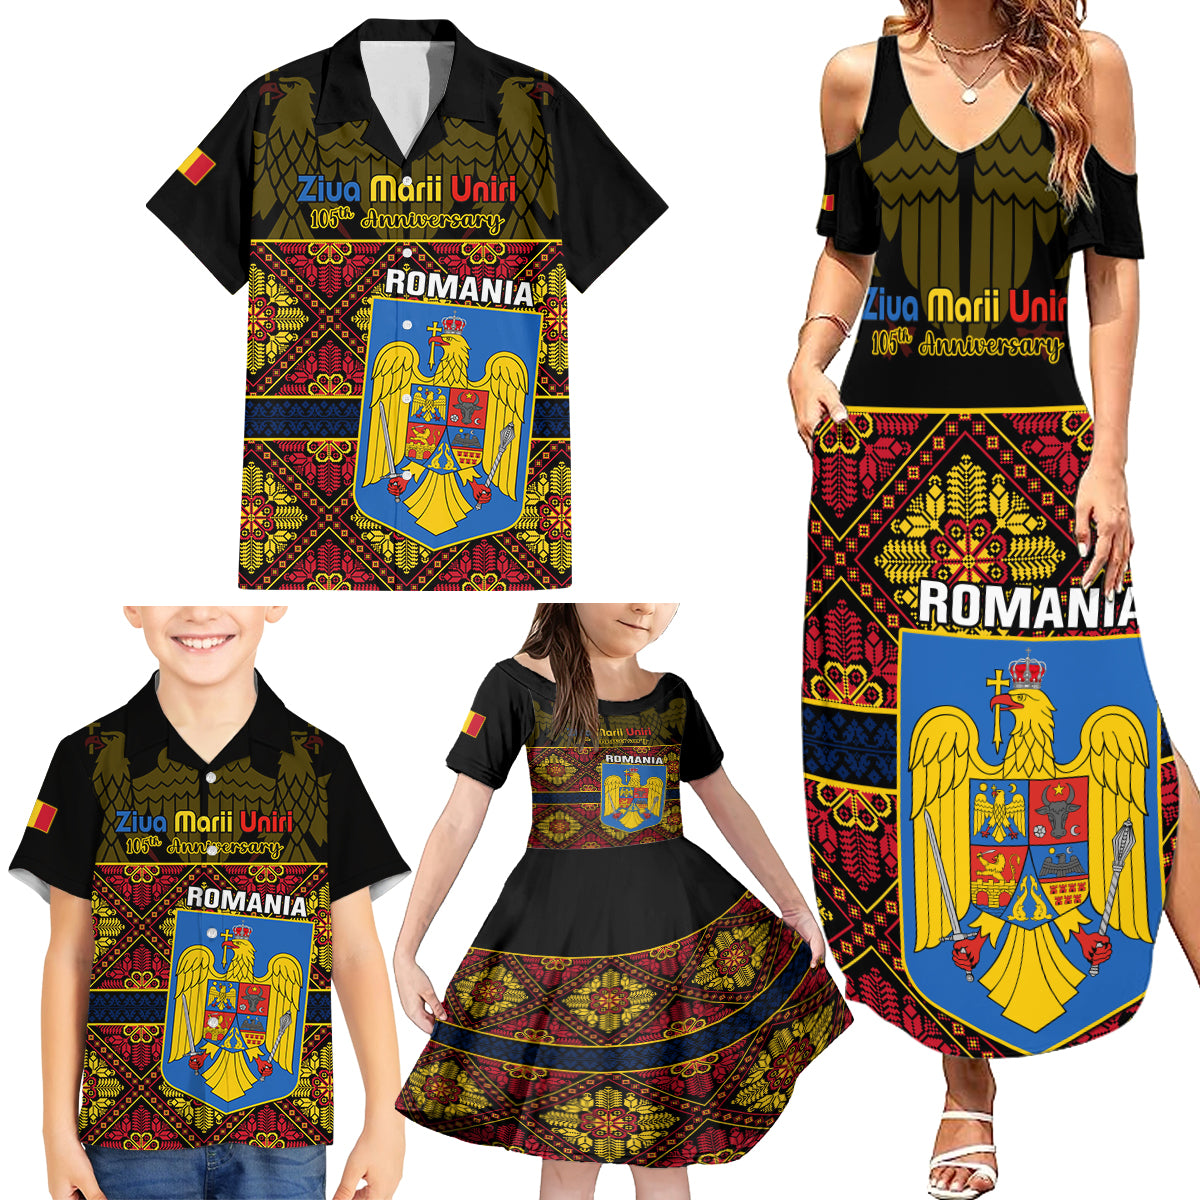 personalised-romania-great-union-day-family-matching-summer-maxi-dress-and-hawaiian-shirt-ziua-marii-uniri-105th-anniversary